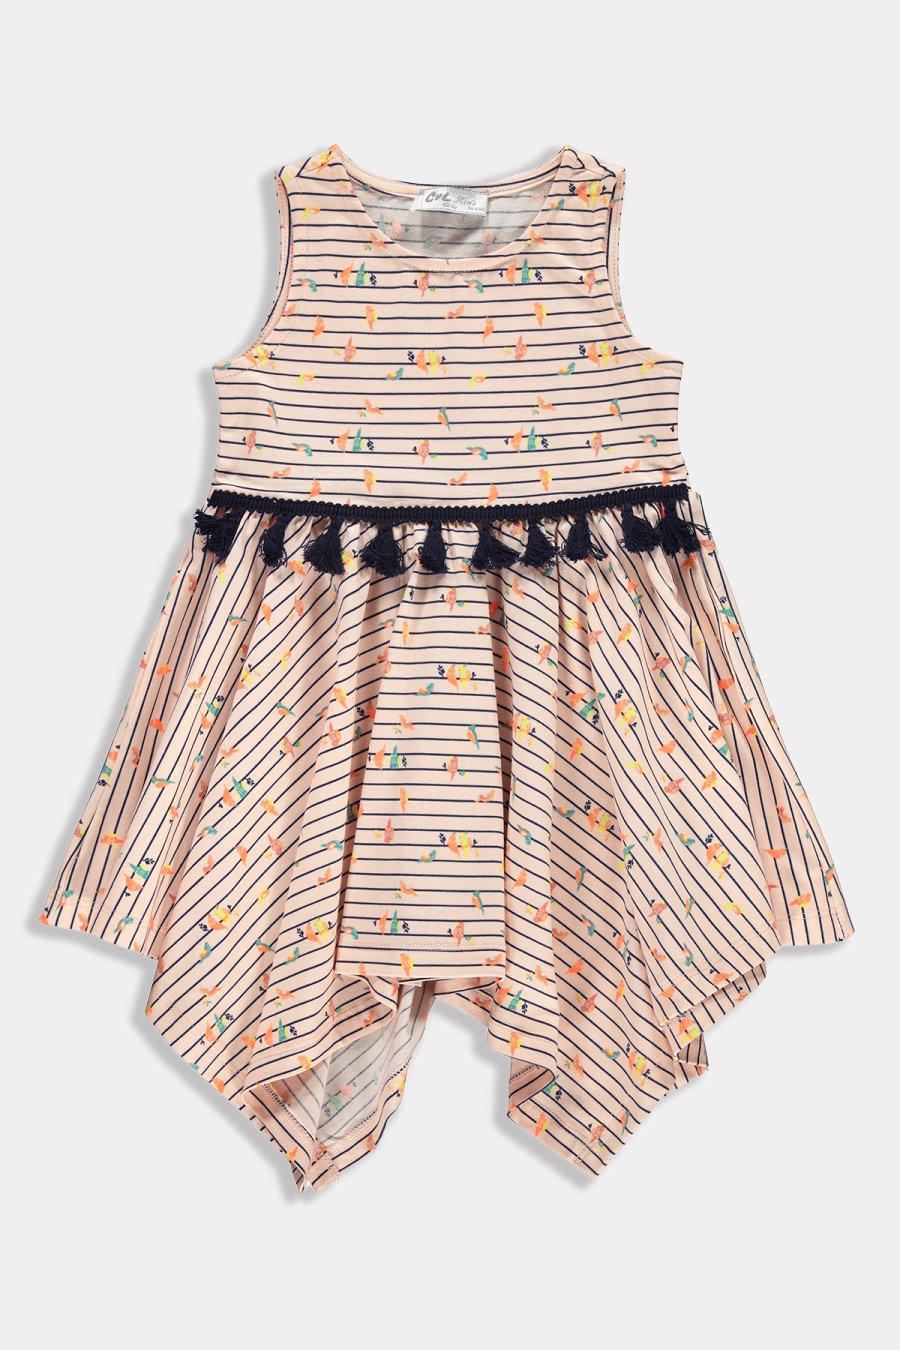 Salmon Tiny Birds Print Handkerchief Tasselled Kids Girl Dress - SinglePrice